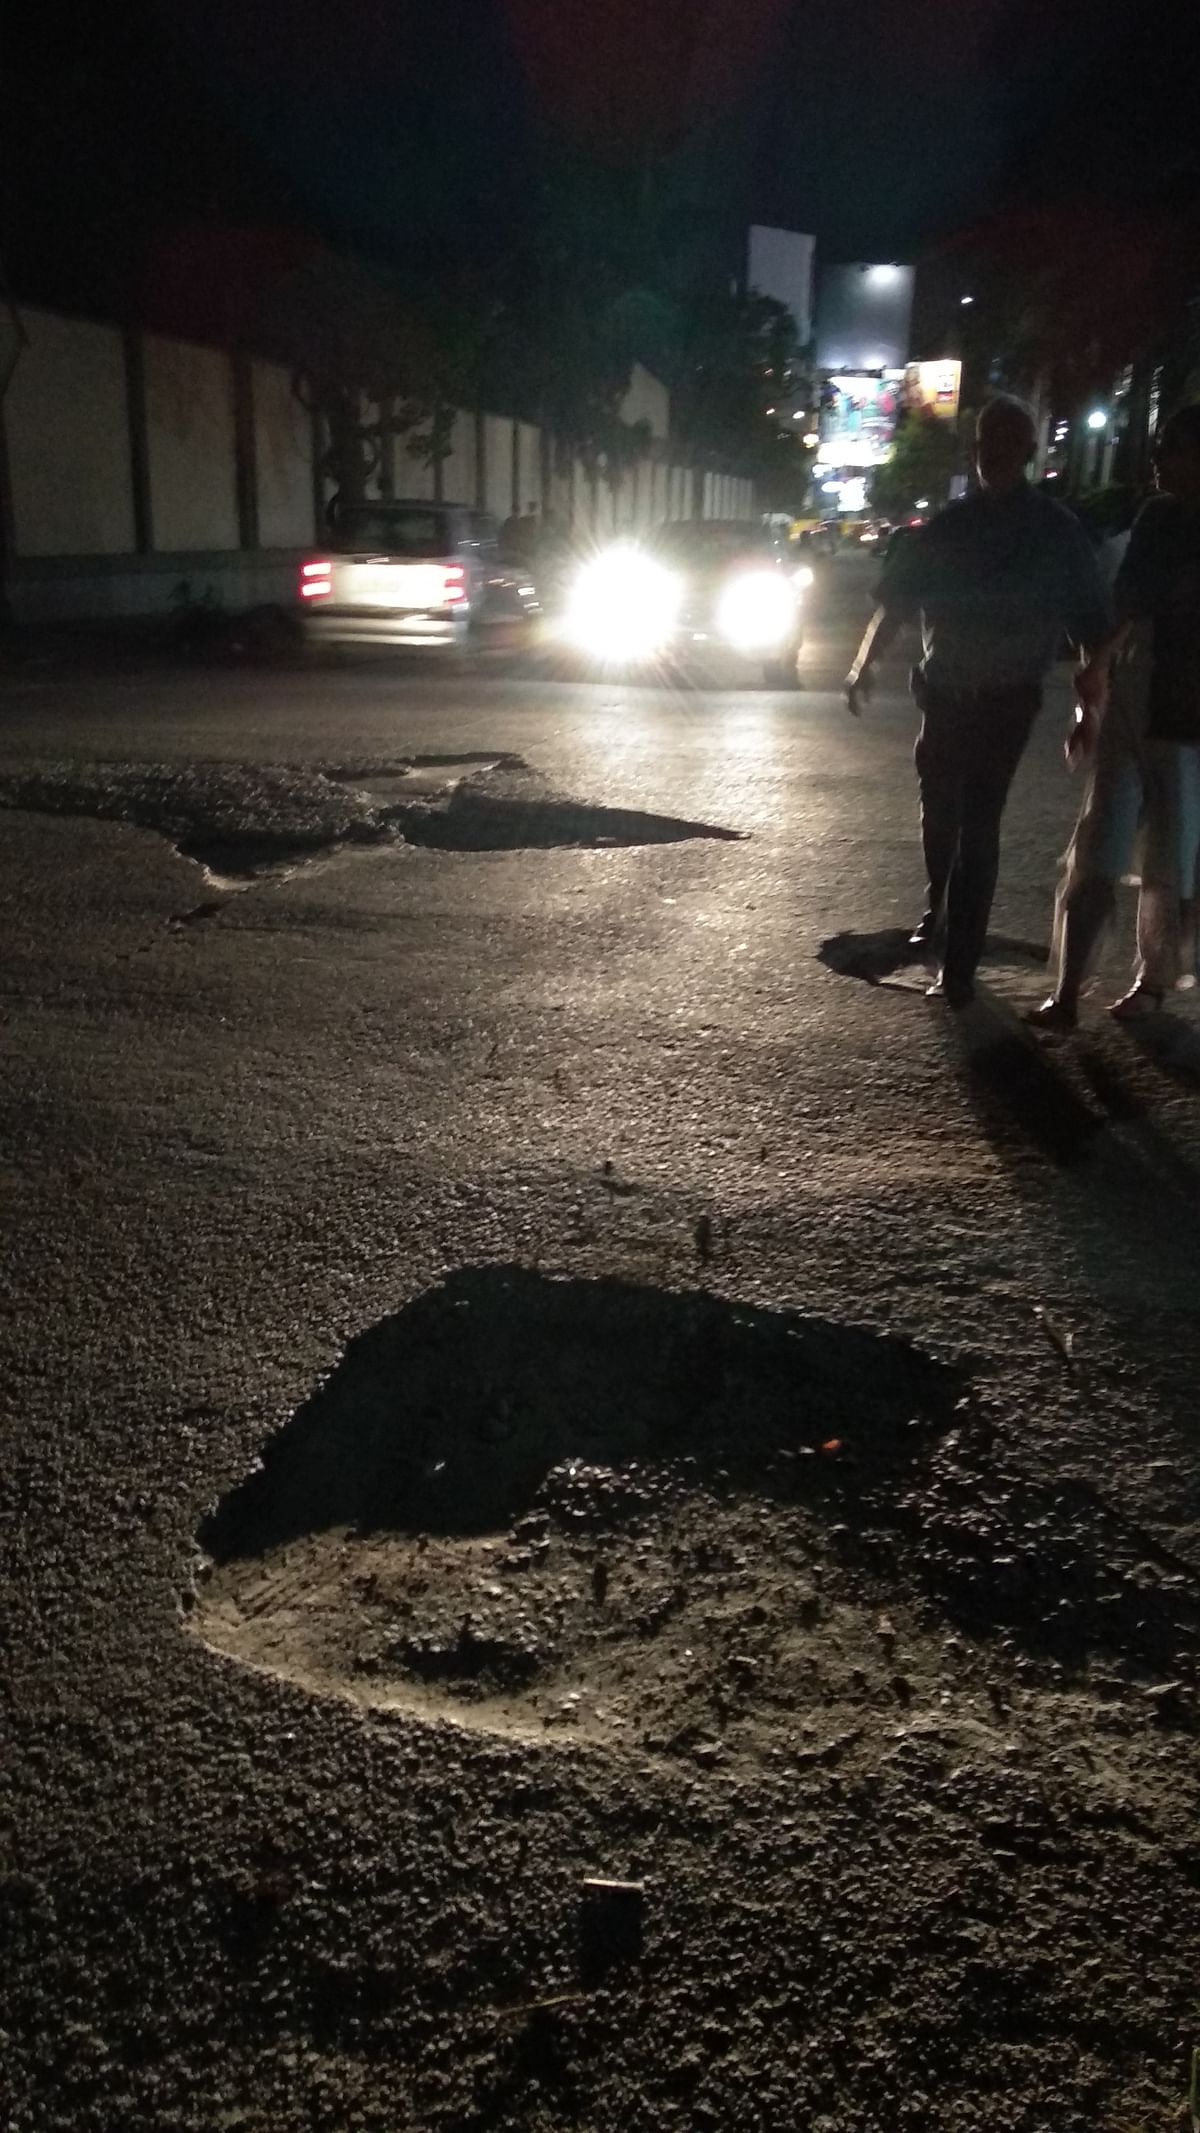 Pothole helpline not working, sorry folks